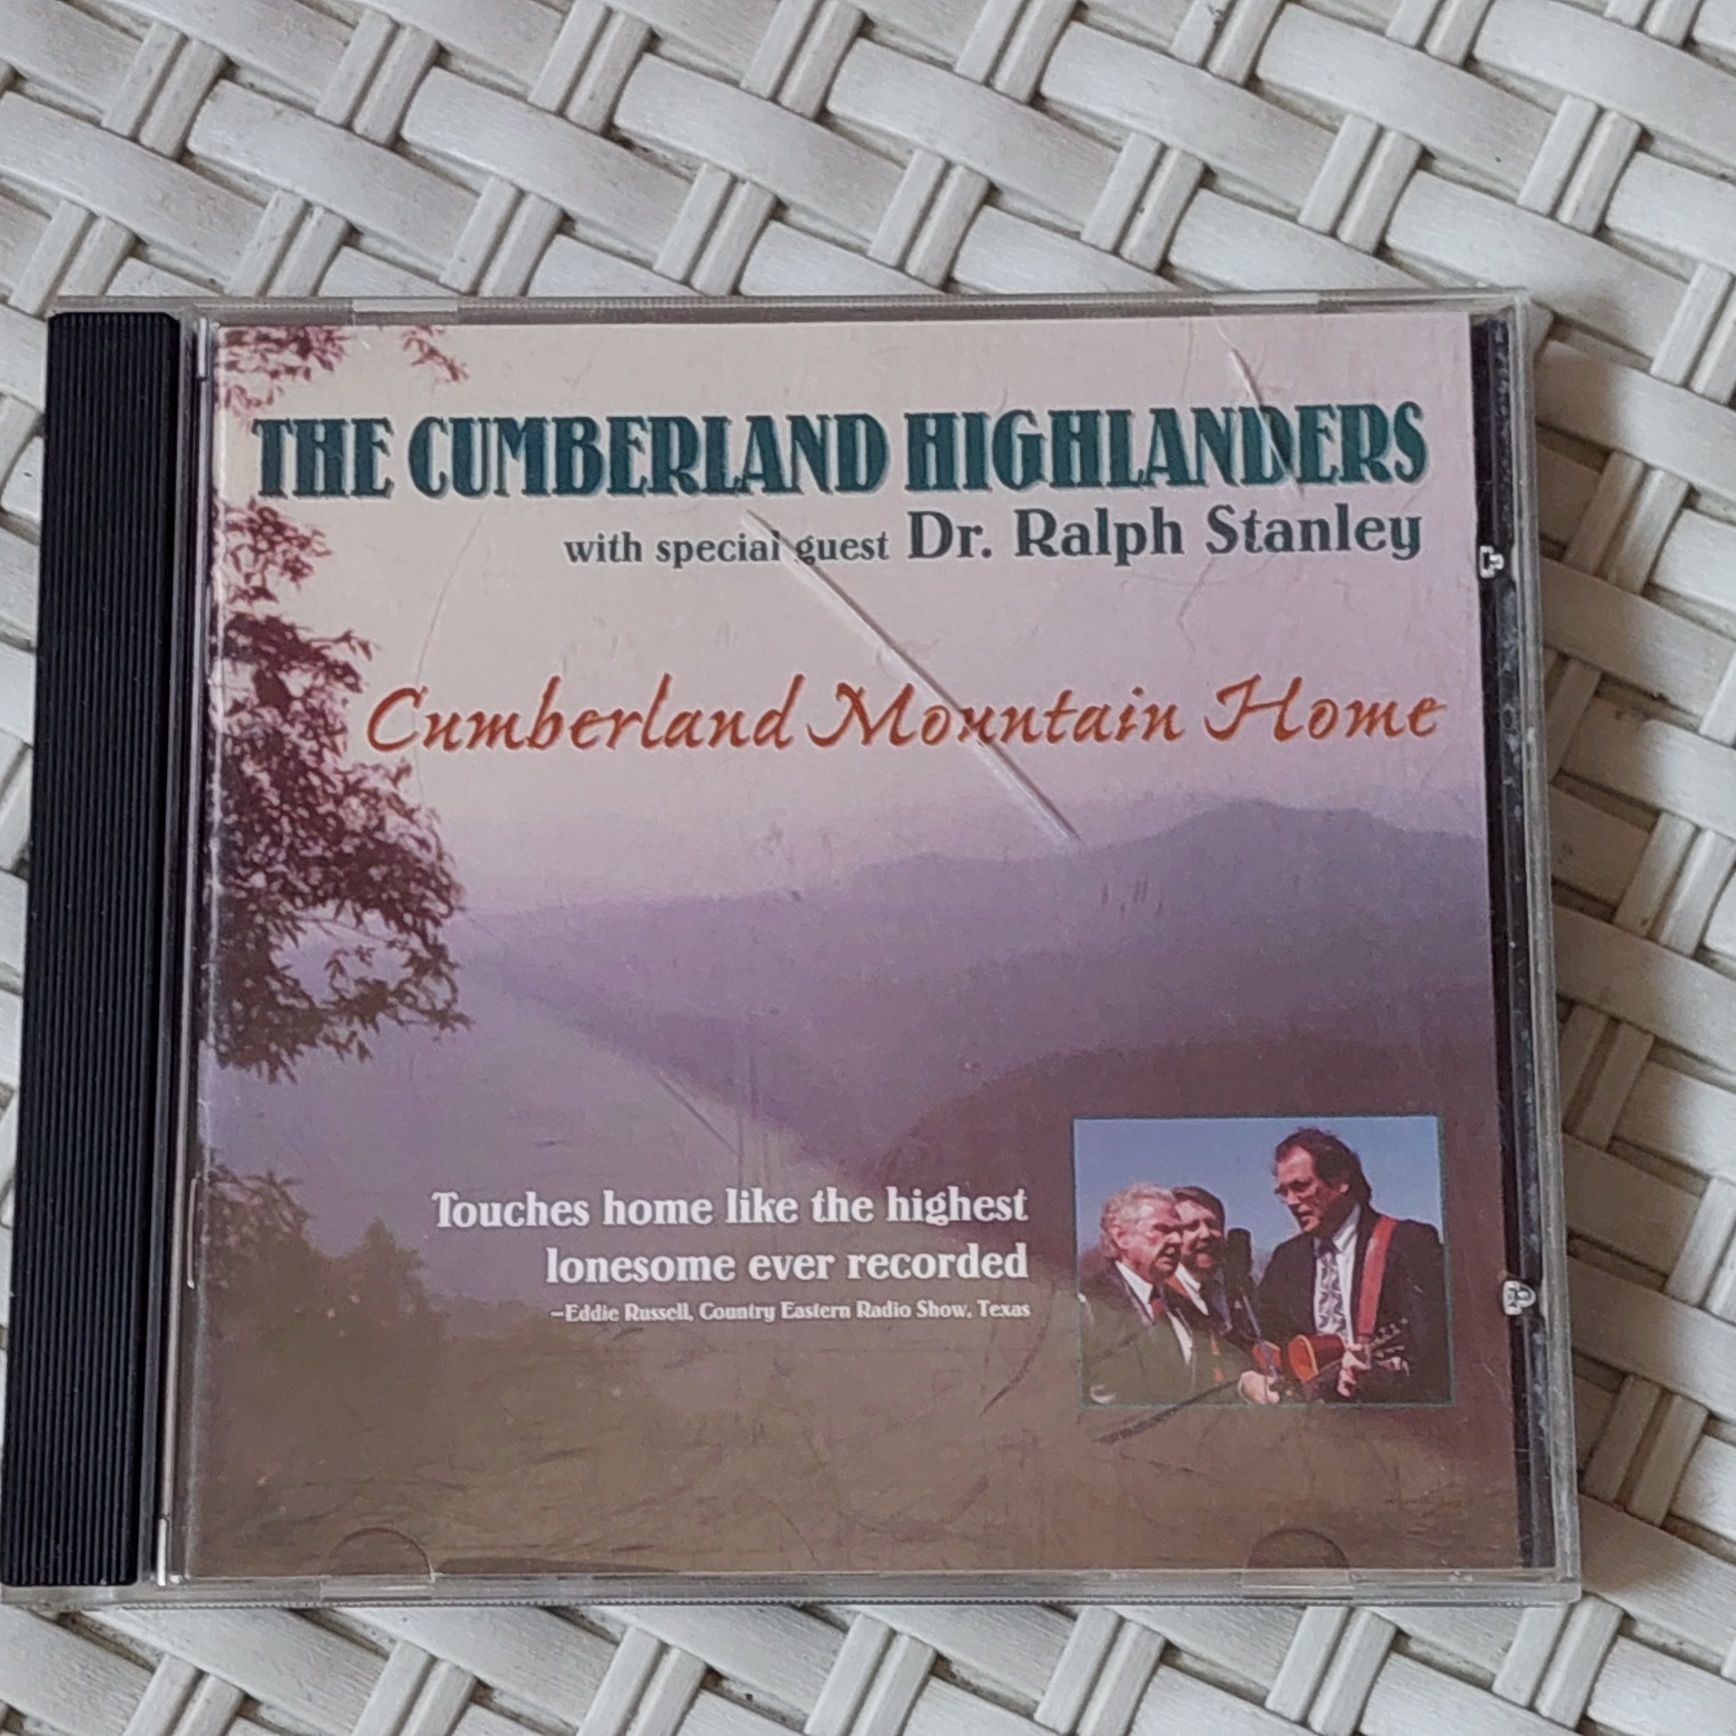 Płytka  CD zspołu CUMBERLAND Hlghlanders